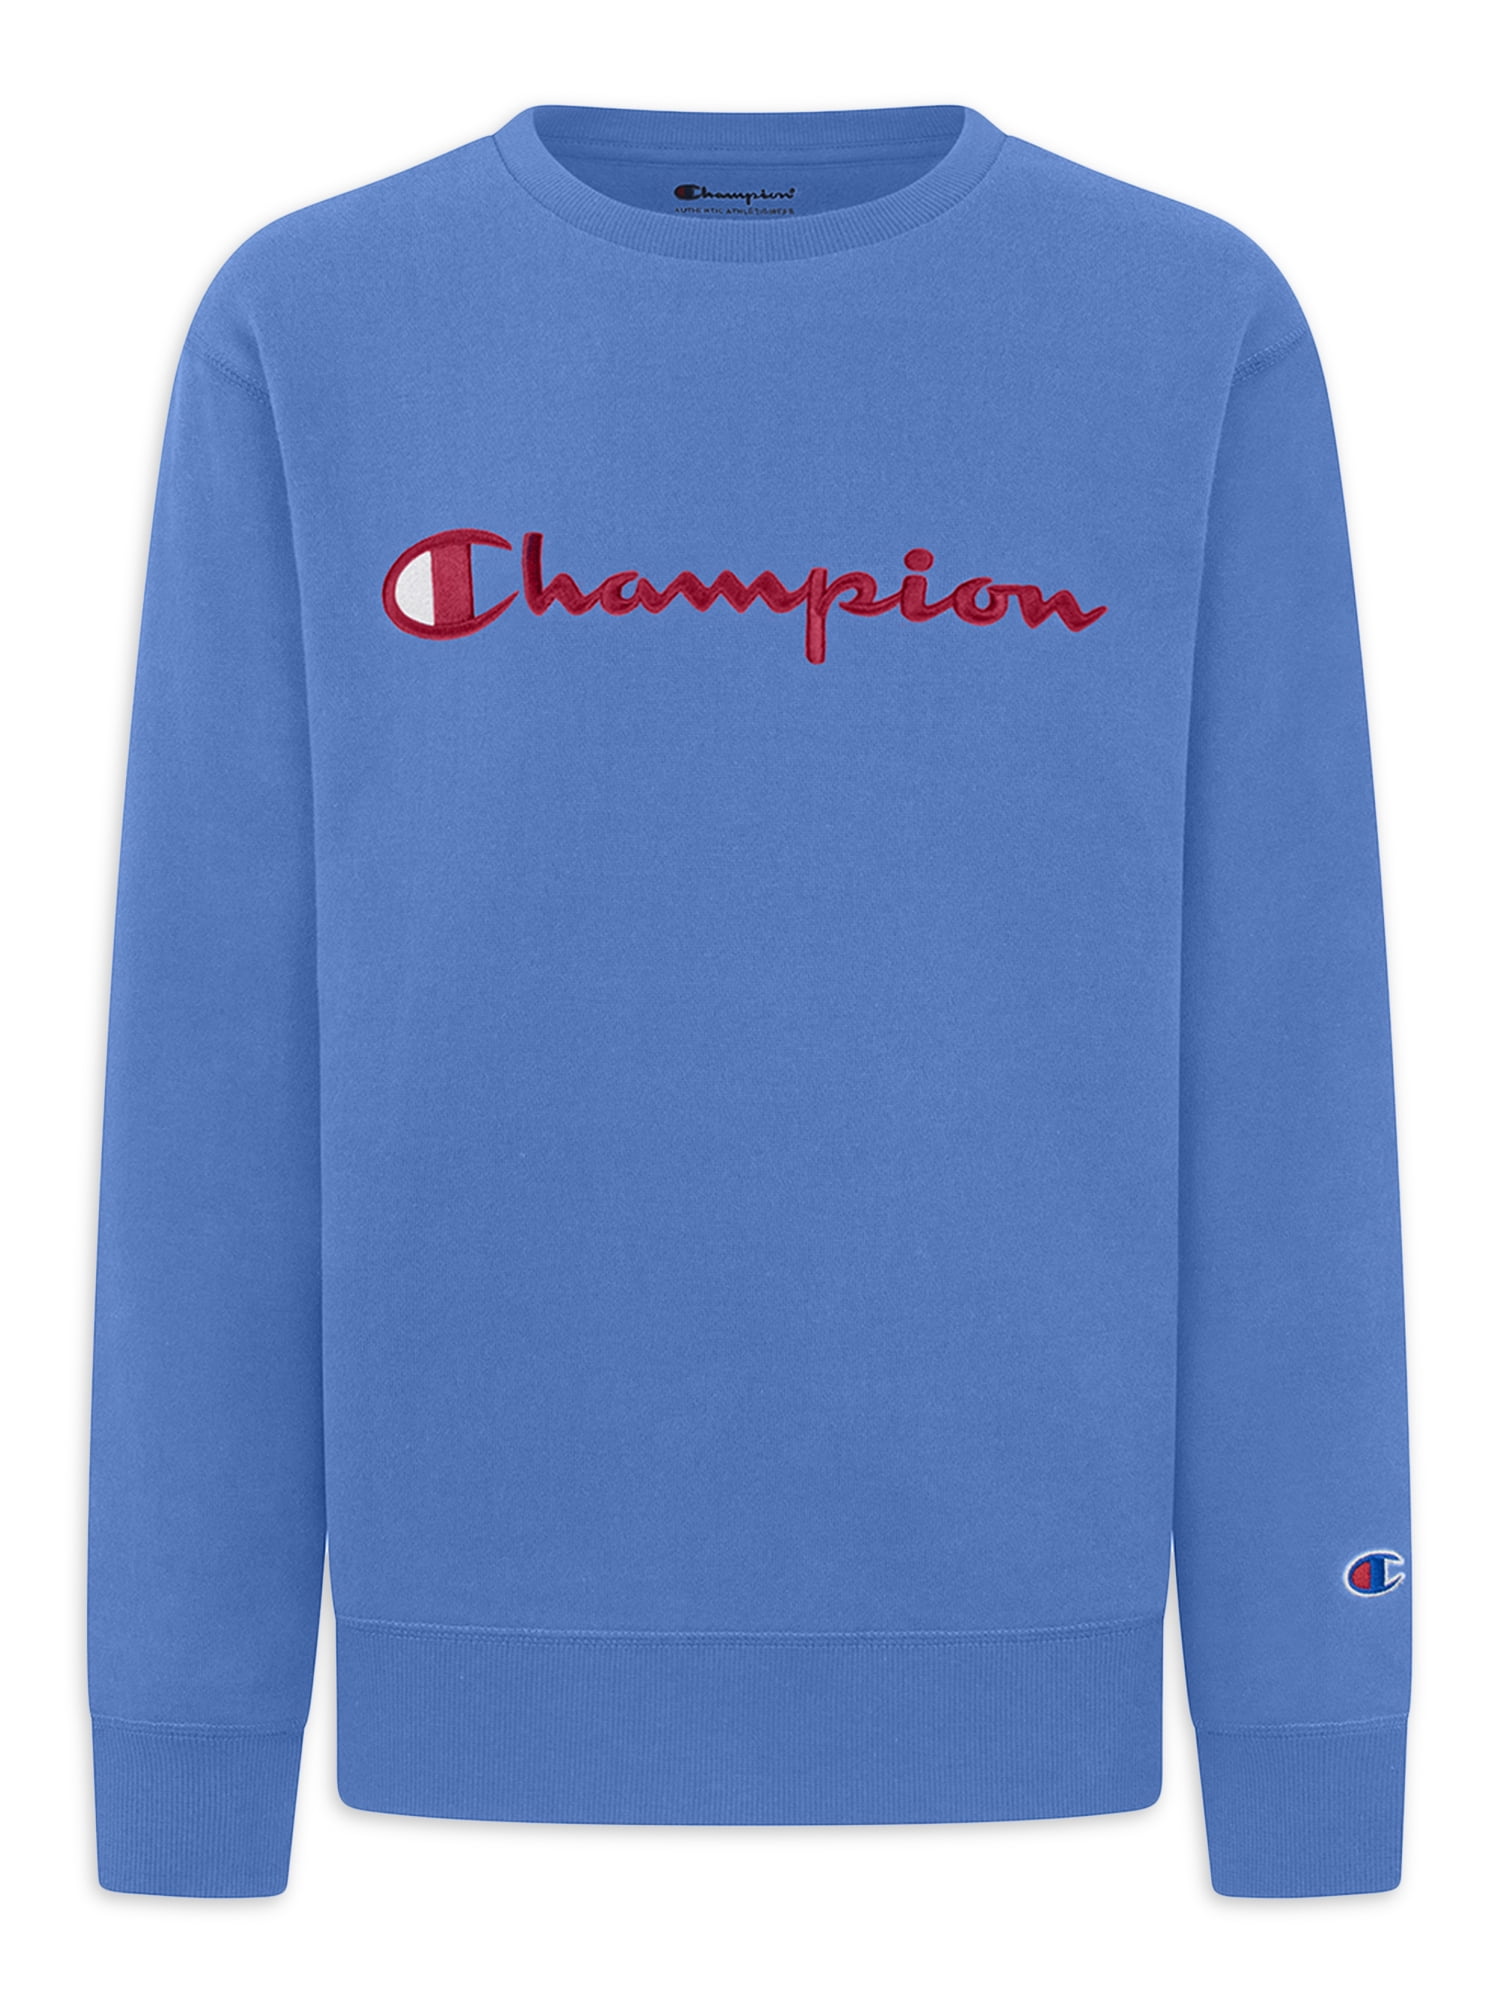 Champion Sizes 8-20 Sweatshirt, Signature Crewneck Boys Fleece